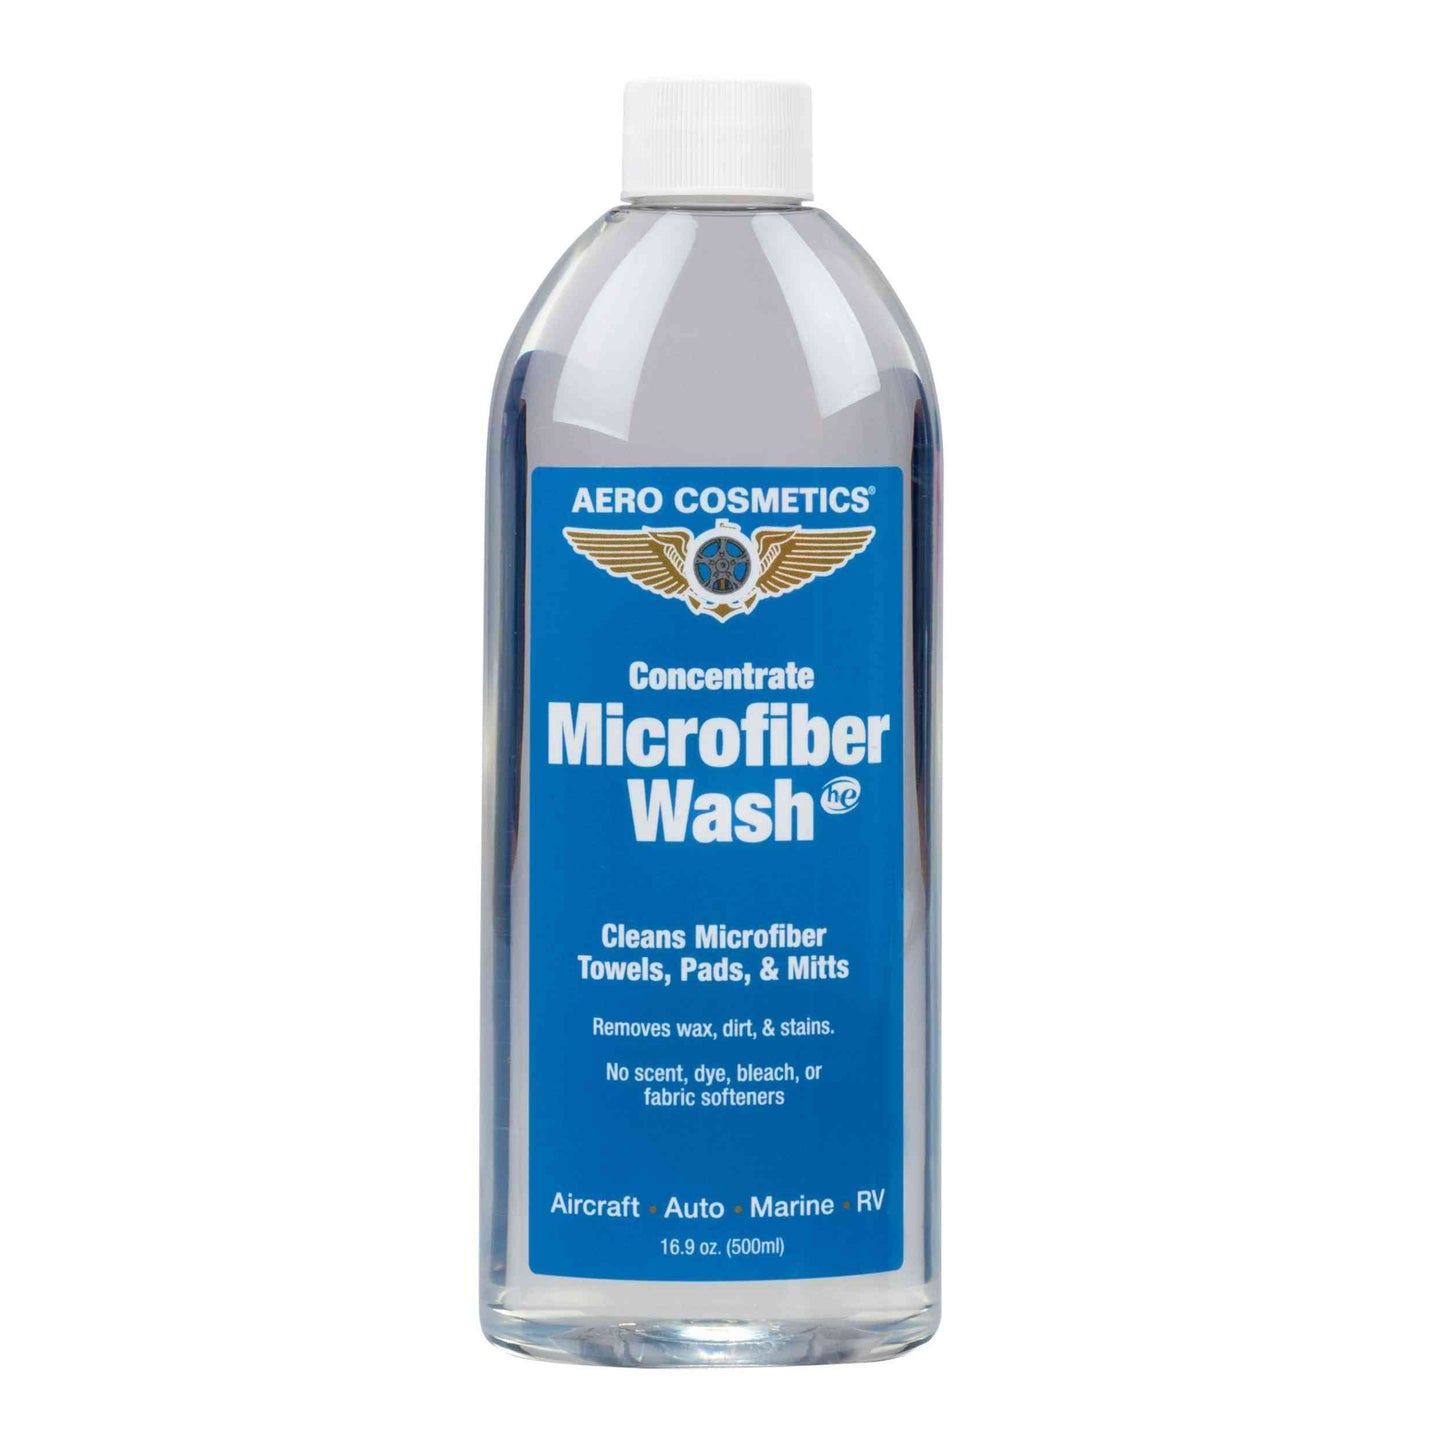 Microfiber Wash 16 Fl. oz - Cleans Microfiber Towels, Pads, & Mitts